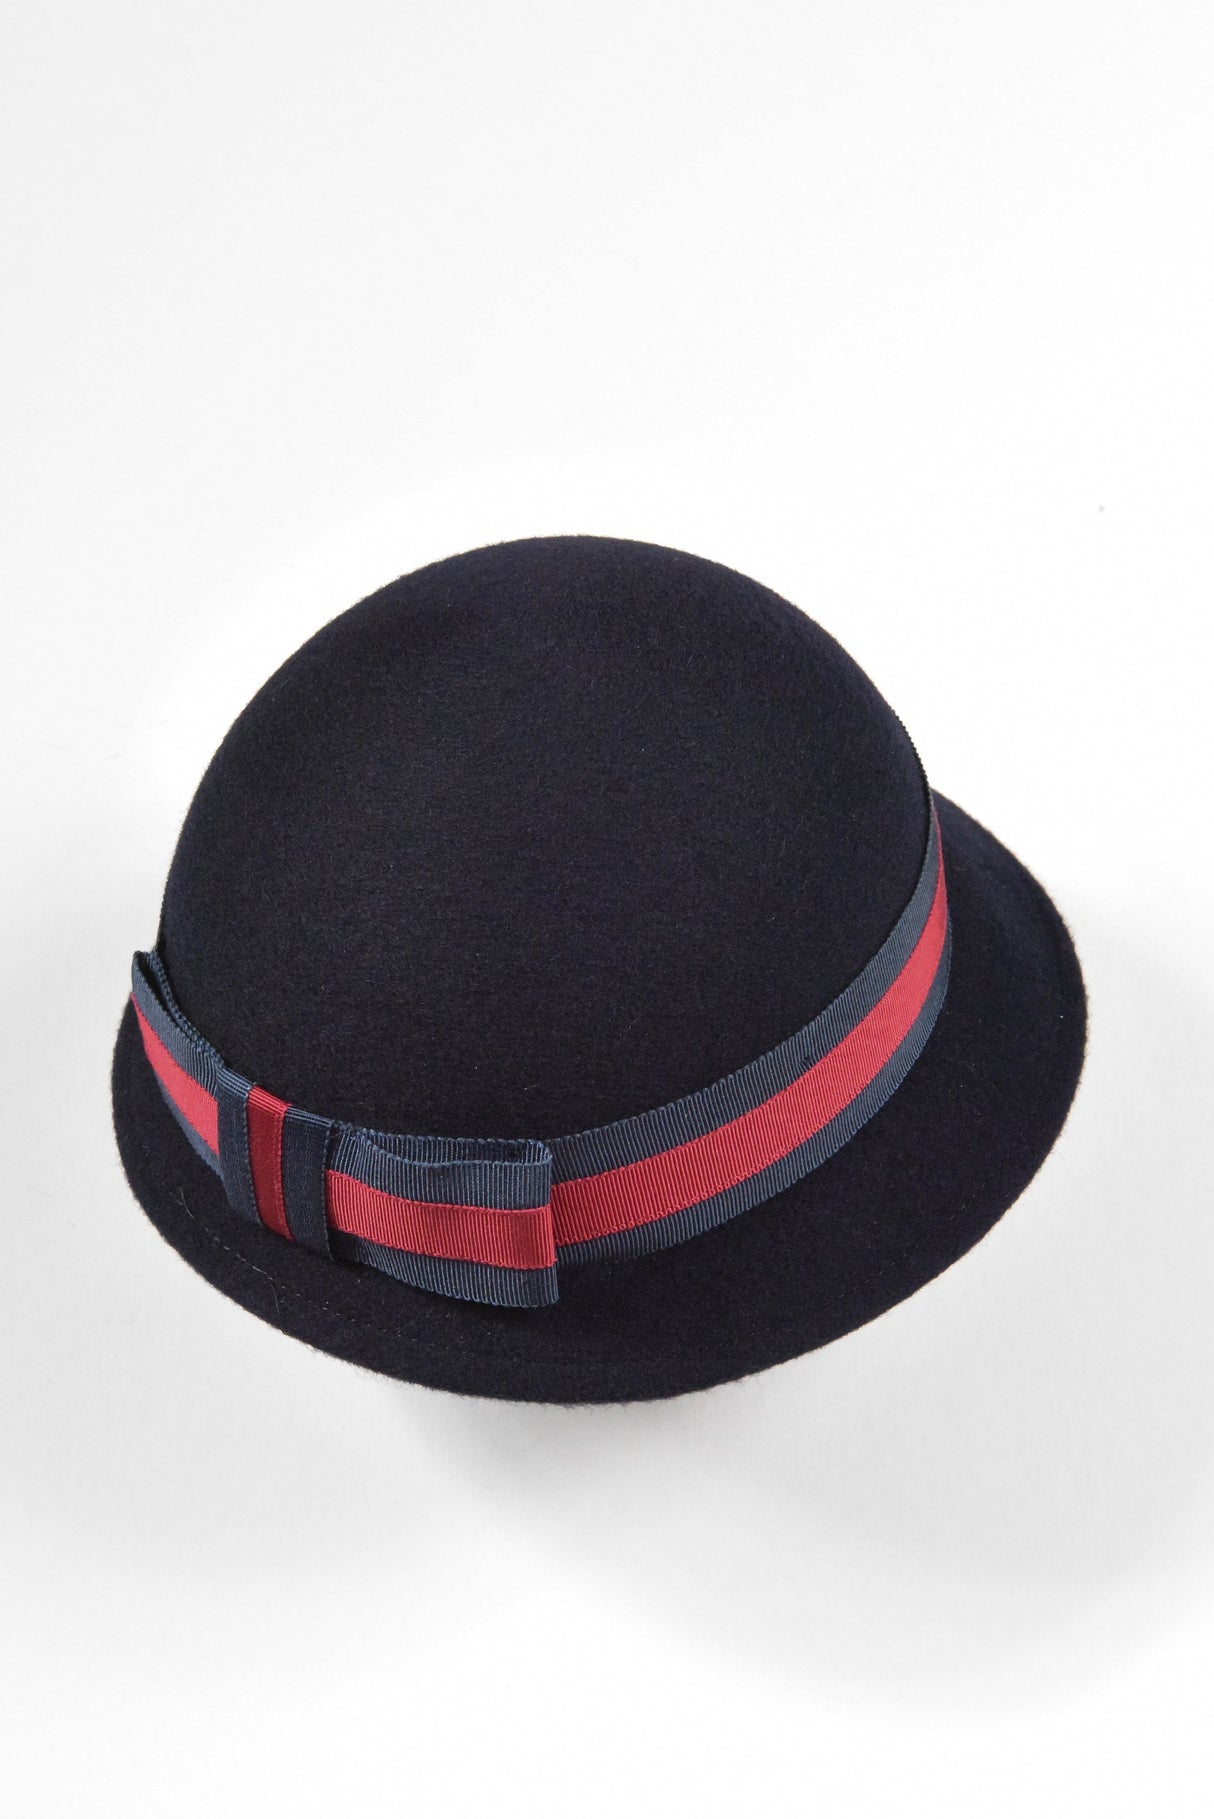 St John's Girls Navy Felt Hat with Ribbon